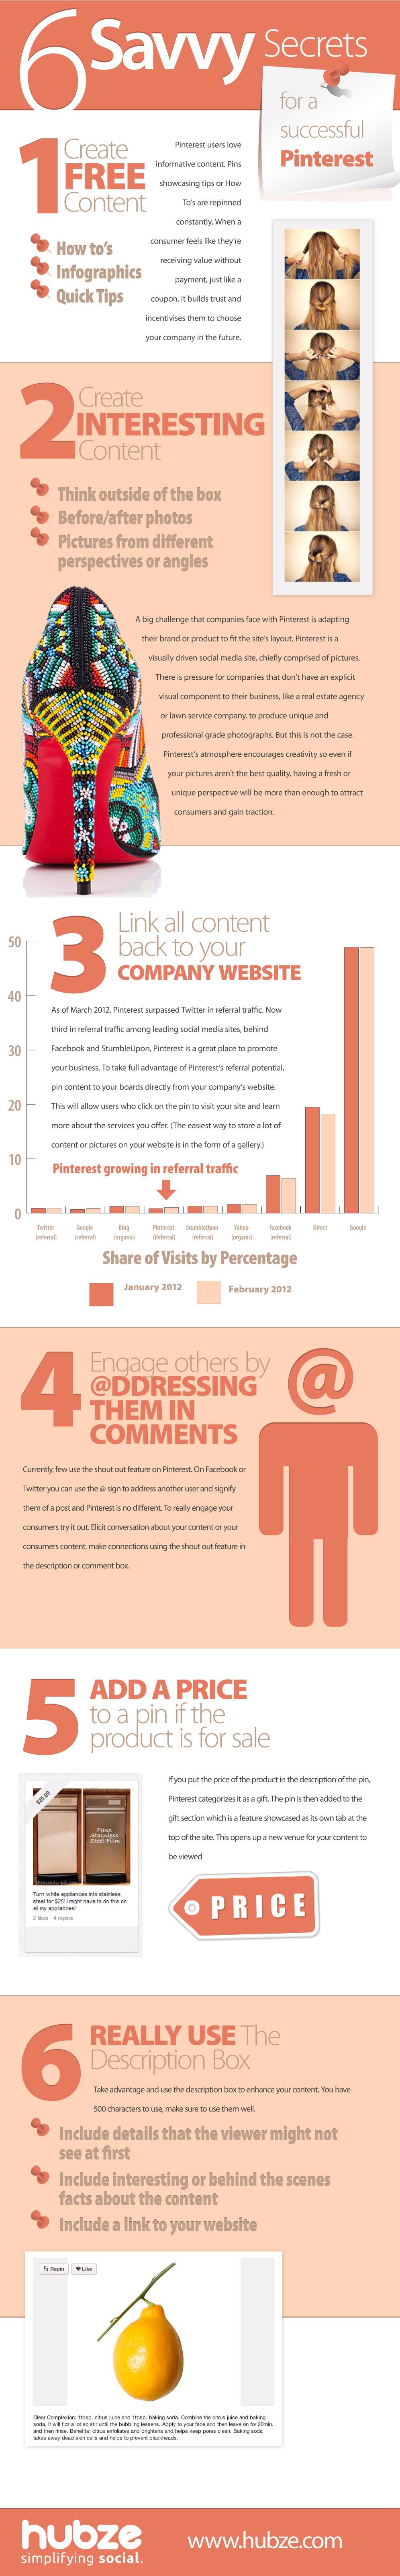 Marketing Secrets For Success On Pinterest [Infographic]